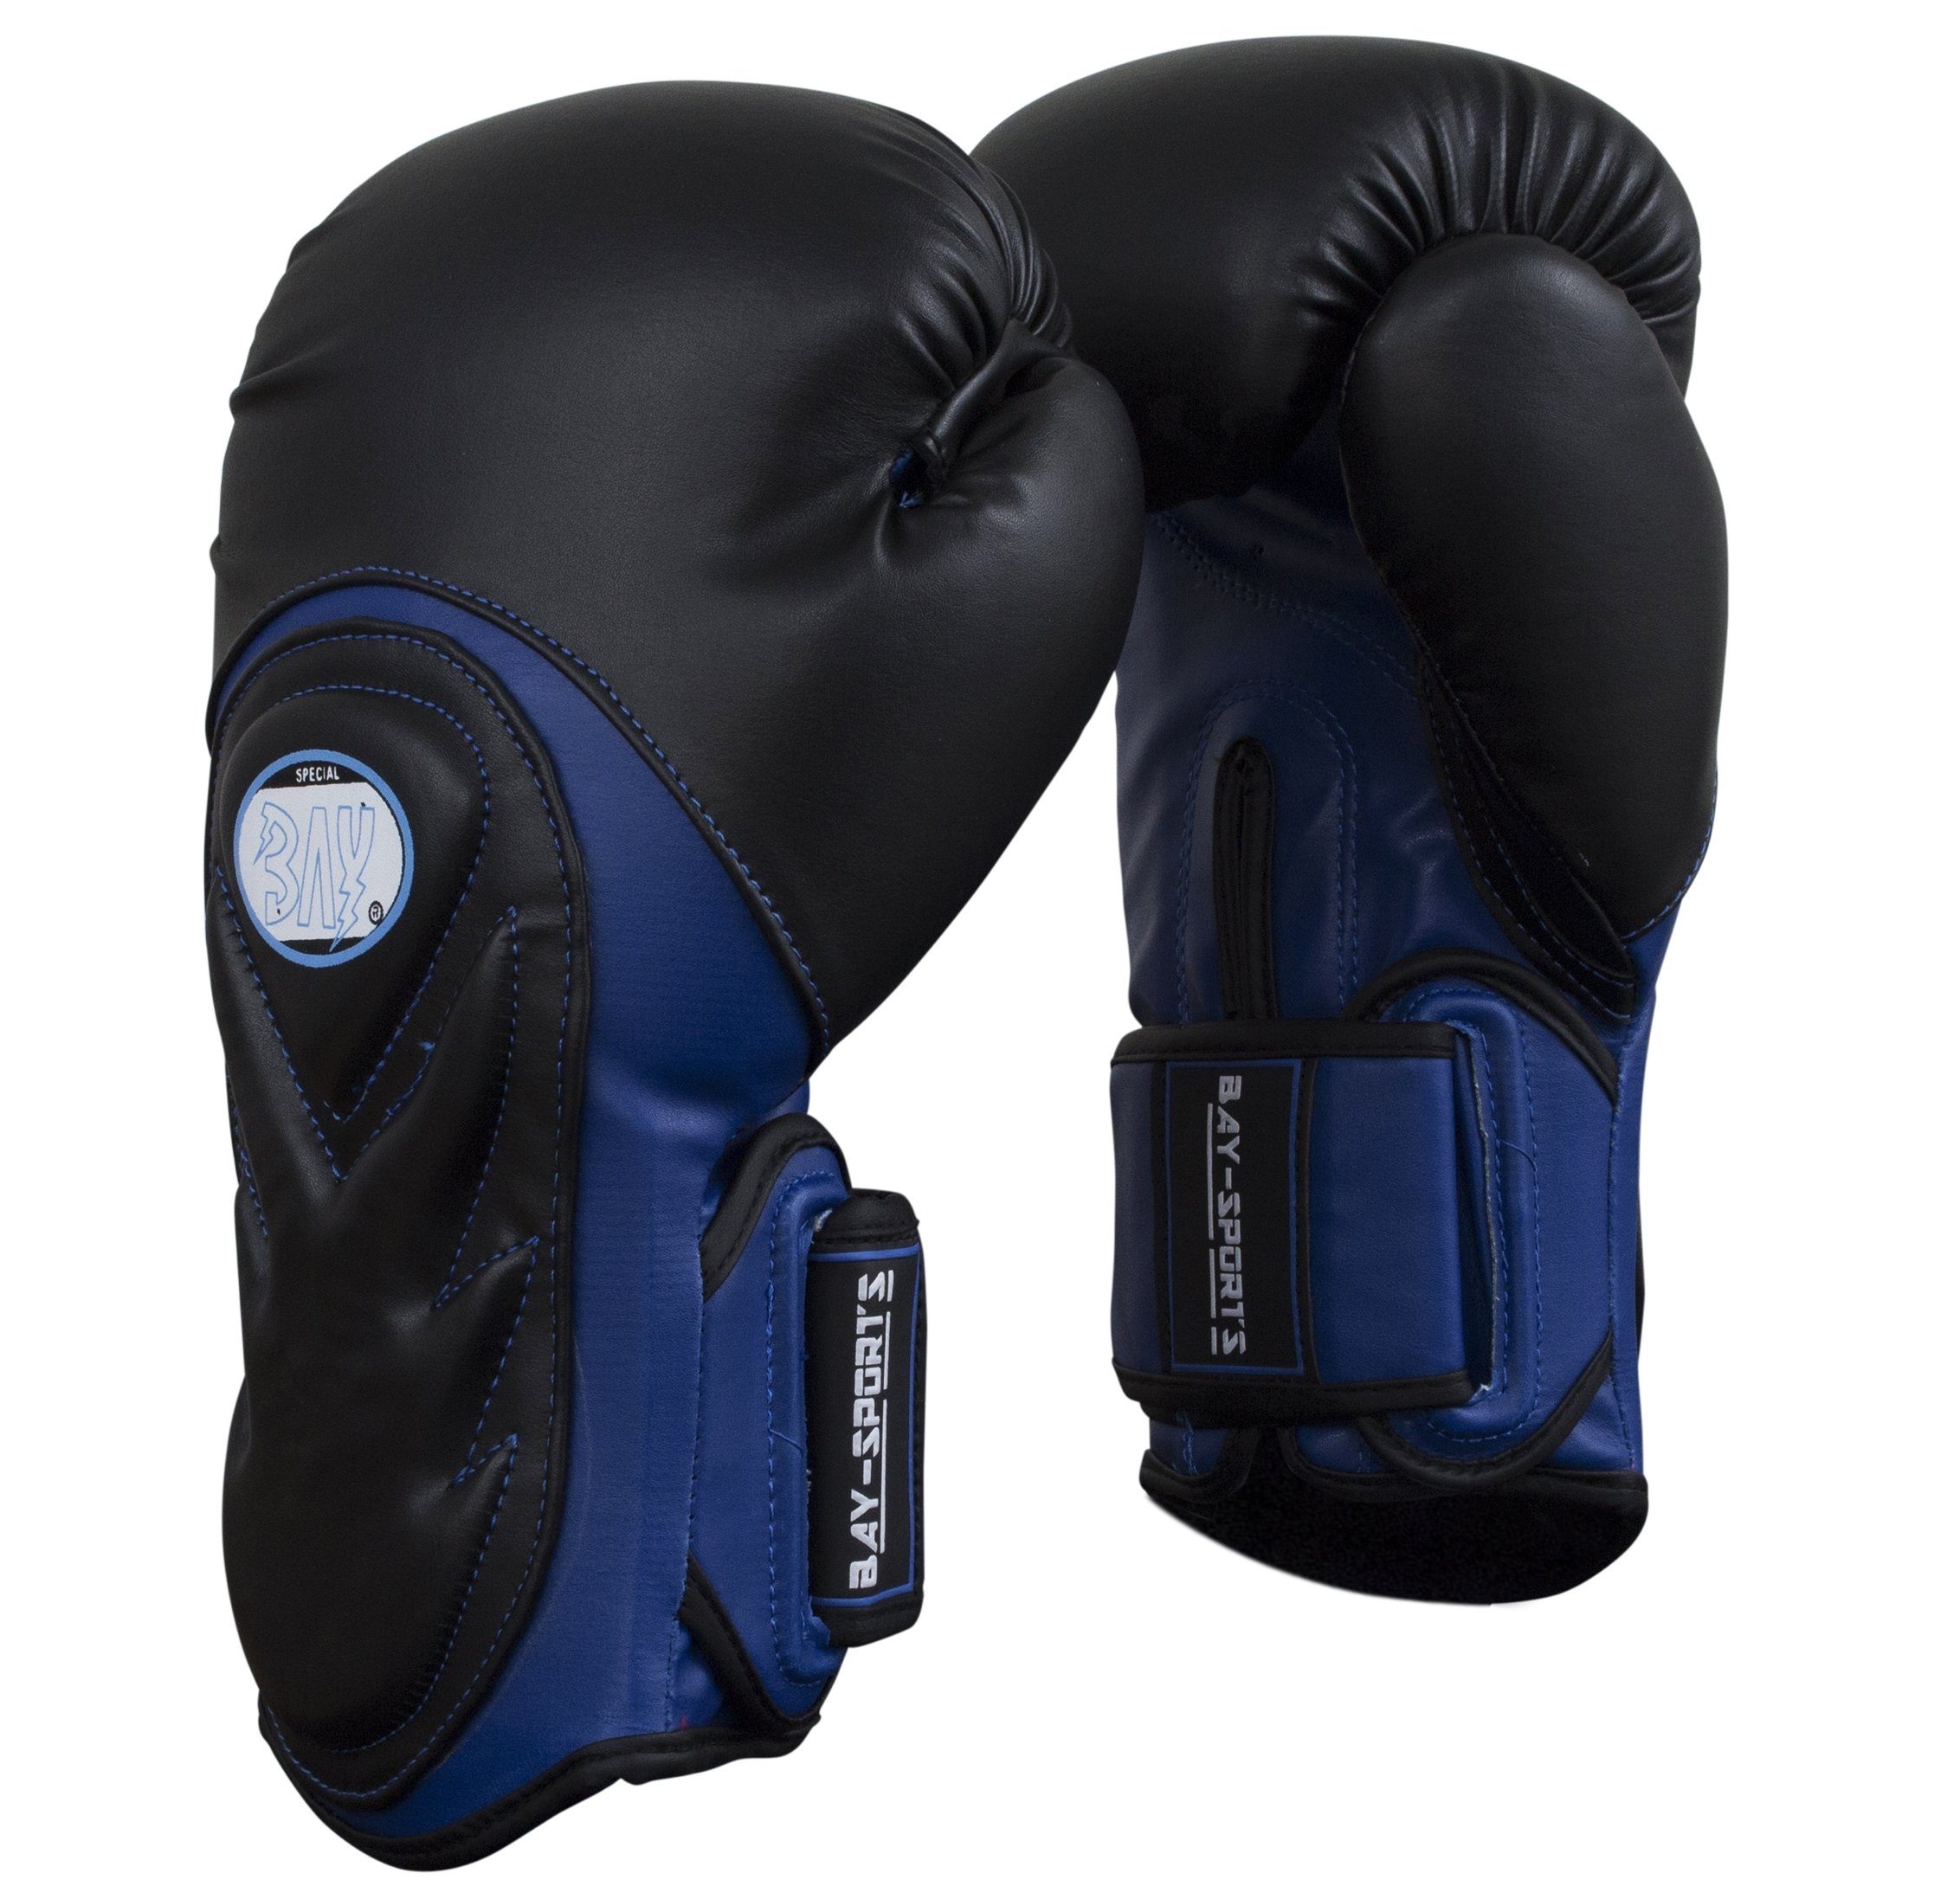 Boxen Kickboxen BAY-Sports Bad Box-Handschuhe Style Boxhandschuhe schwarz/blau